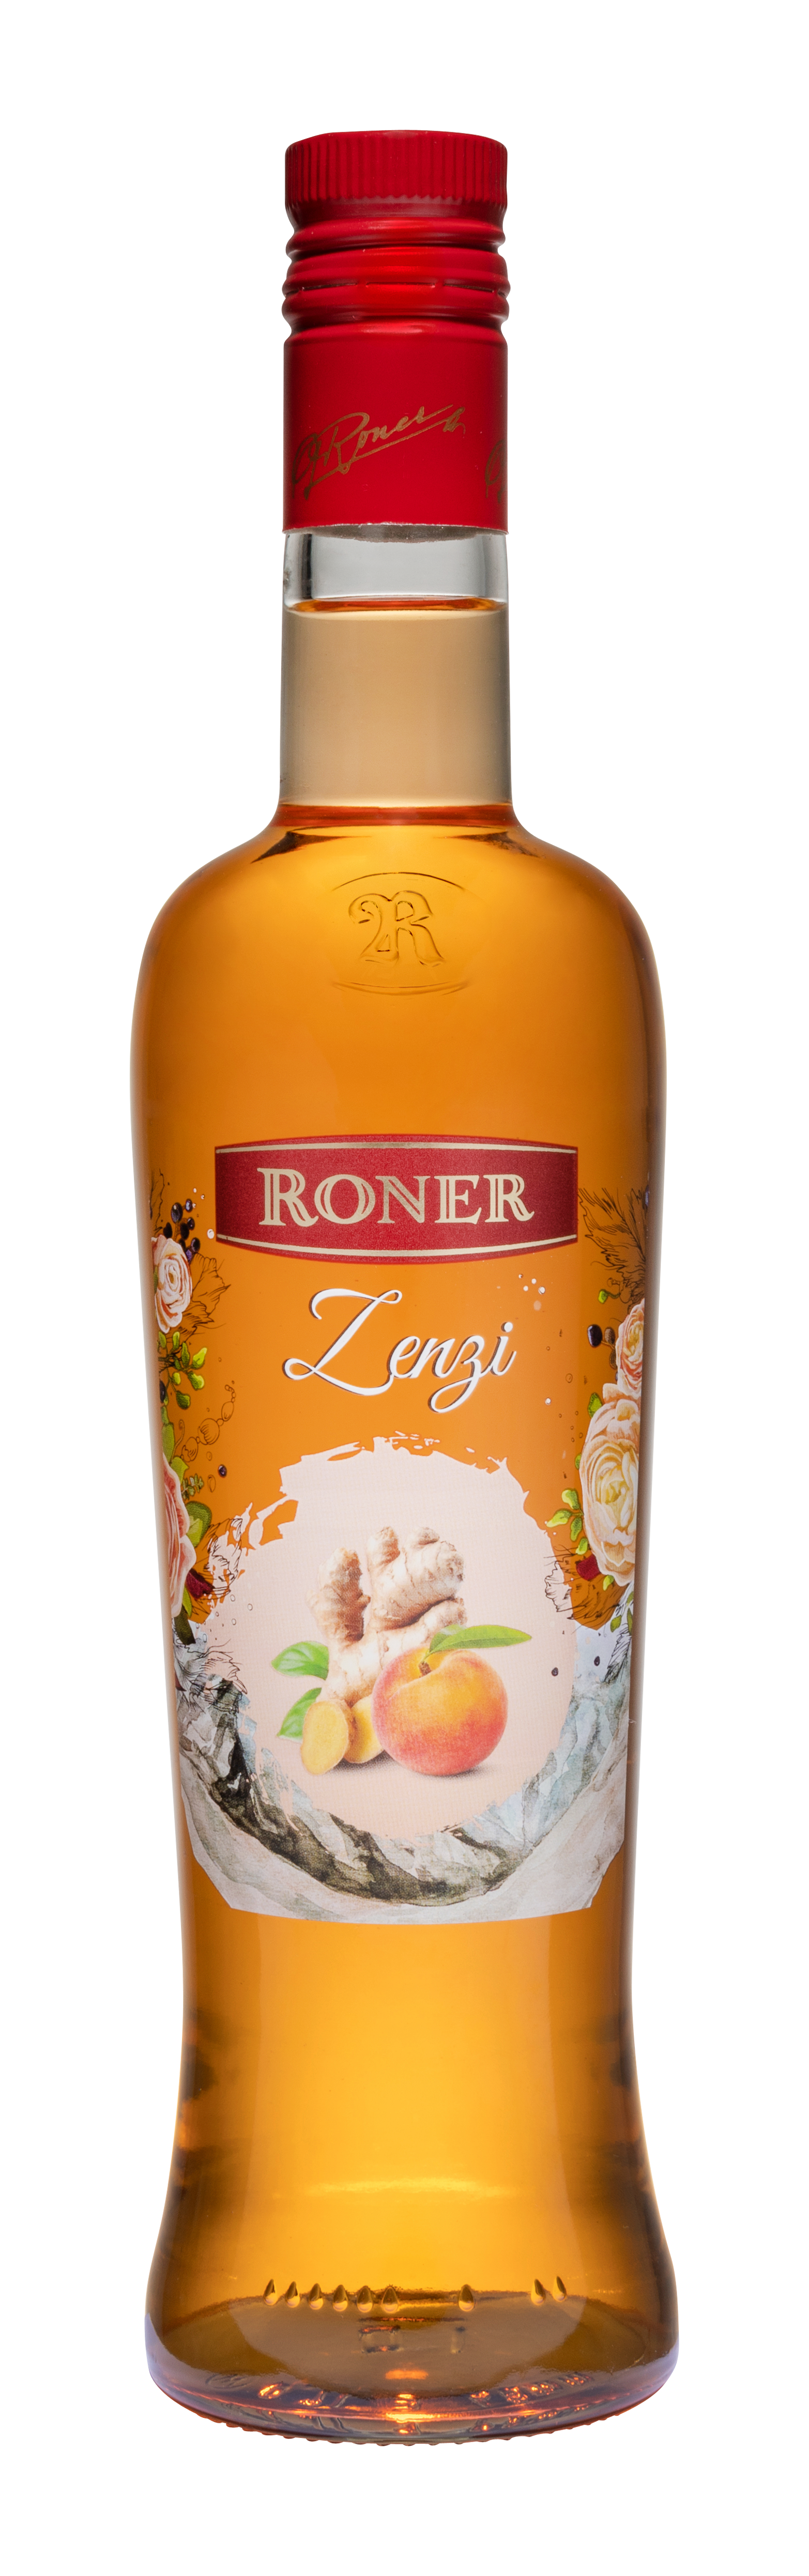 Zenzi - Ingwer-Pfirsich